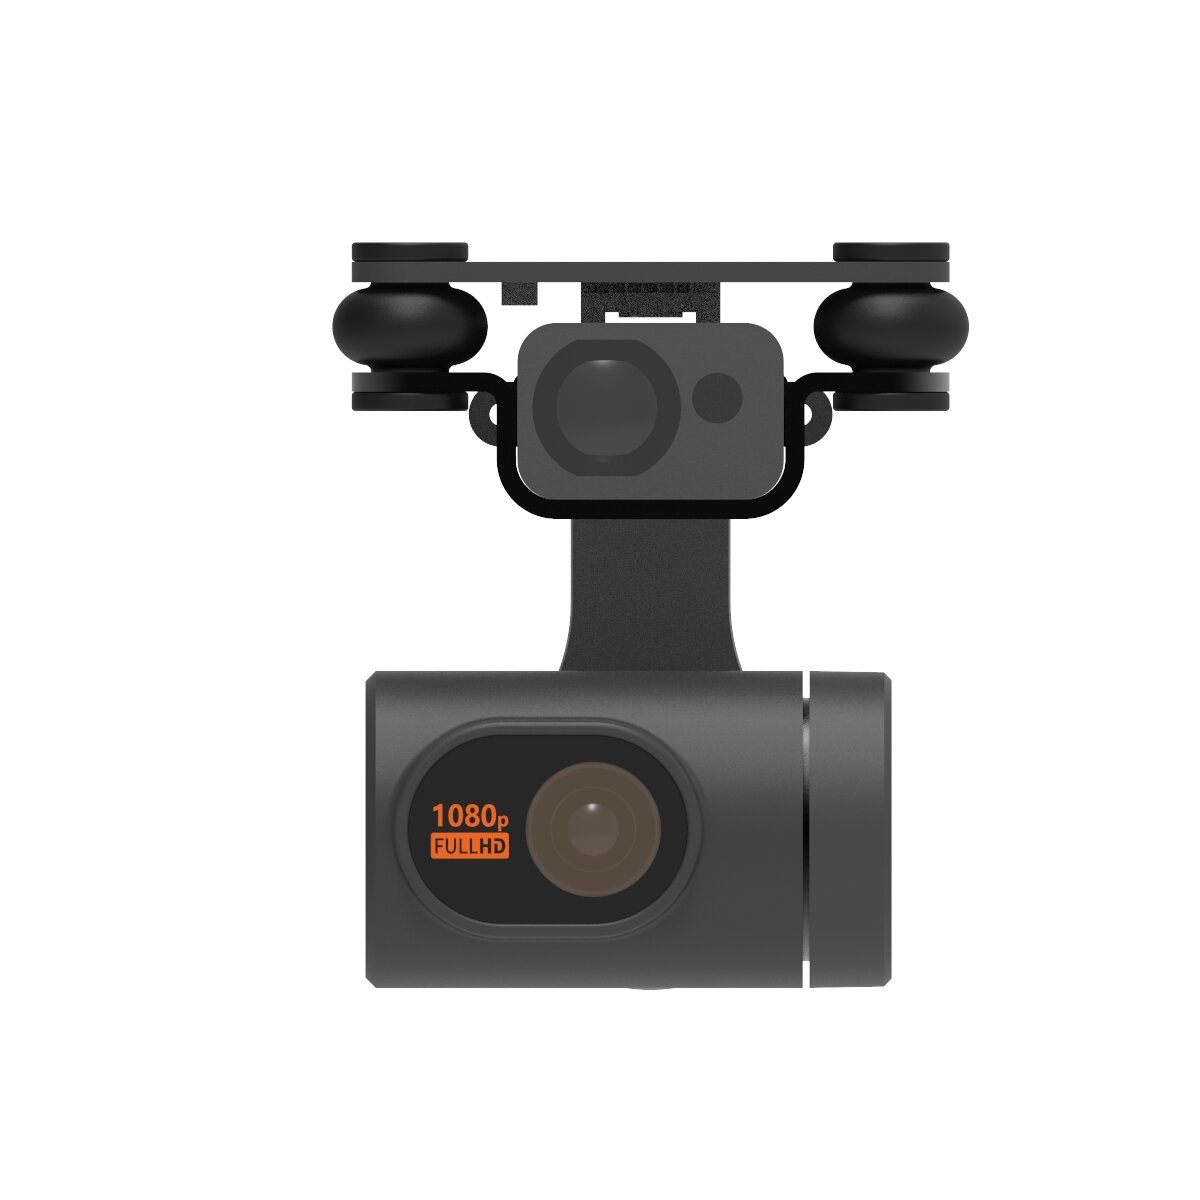 Skydroid 2-as 1080P HD Gimbal-camera met laserobstakel vermijden voor RC-drone